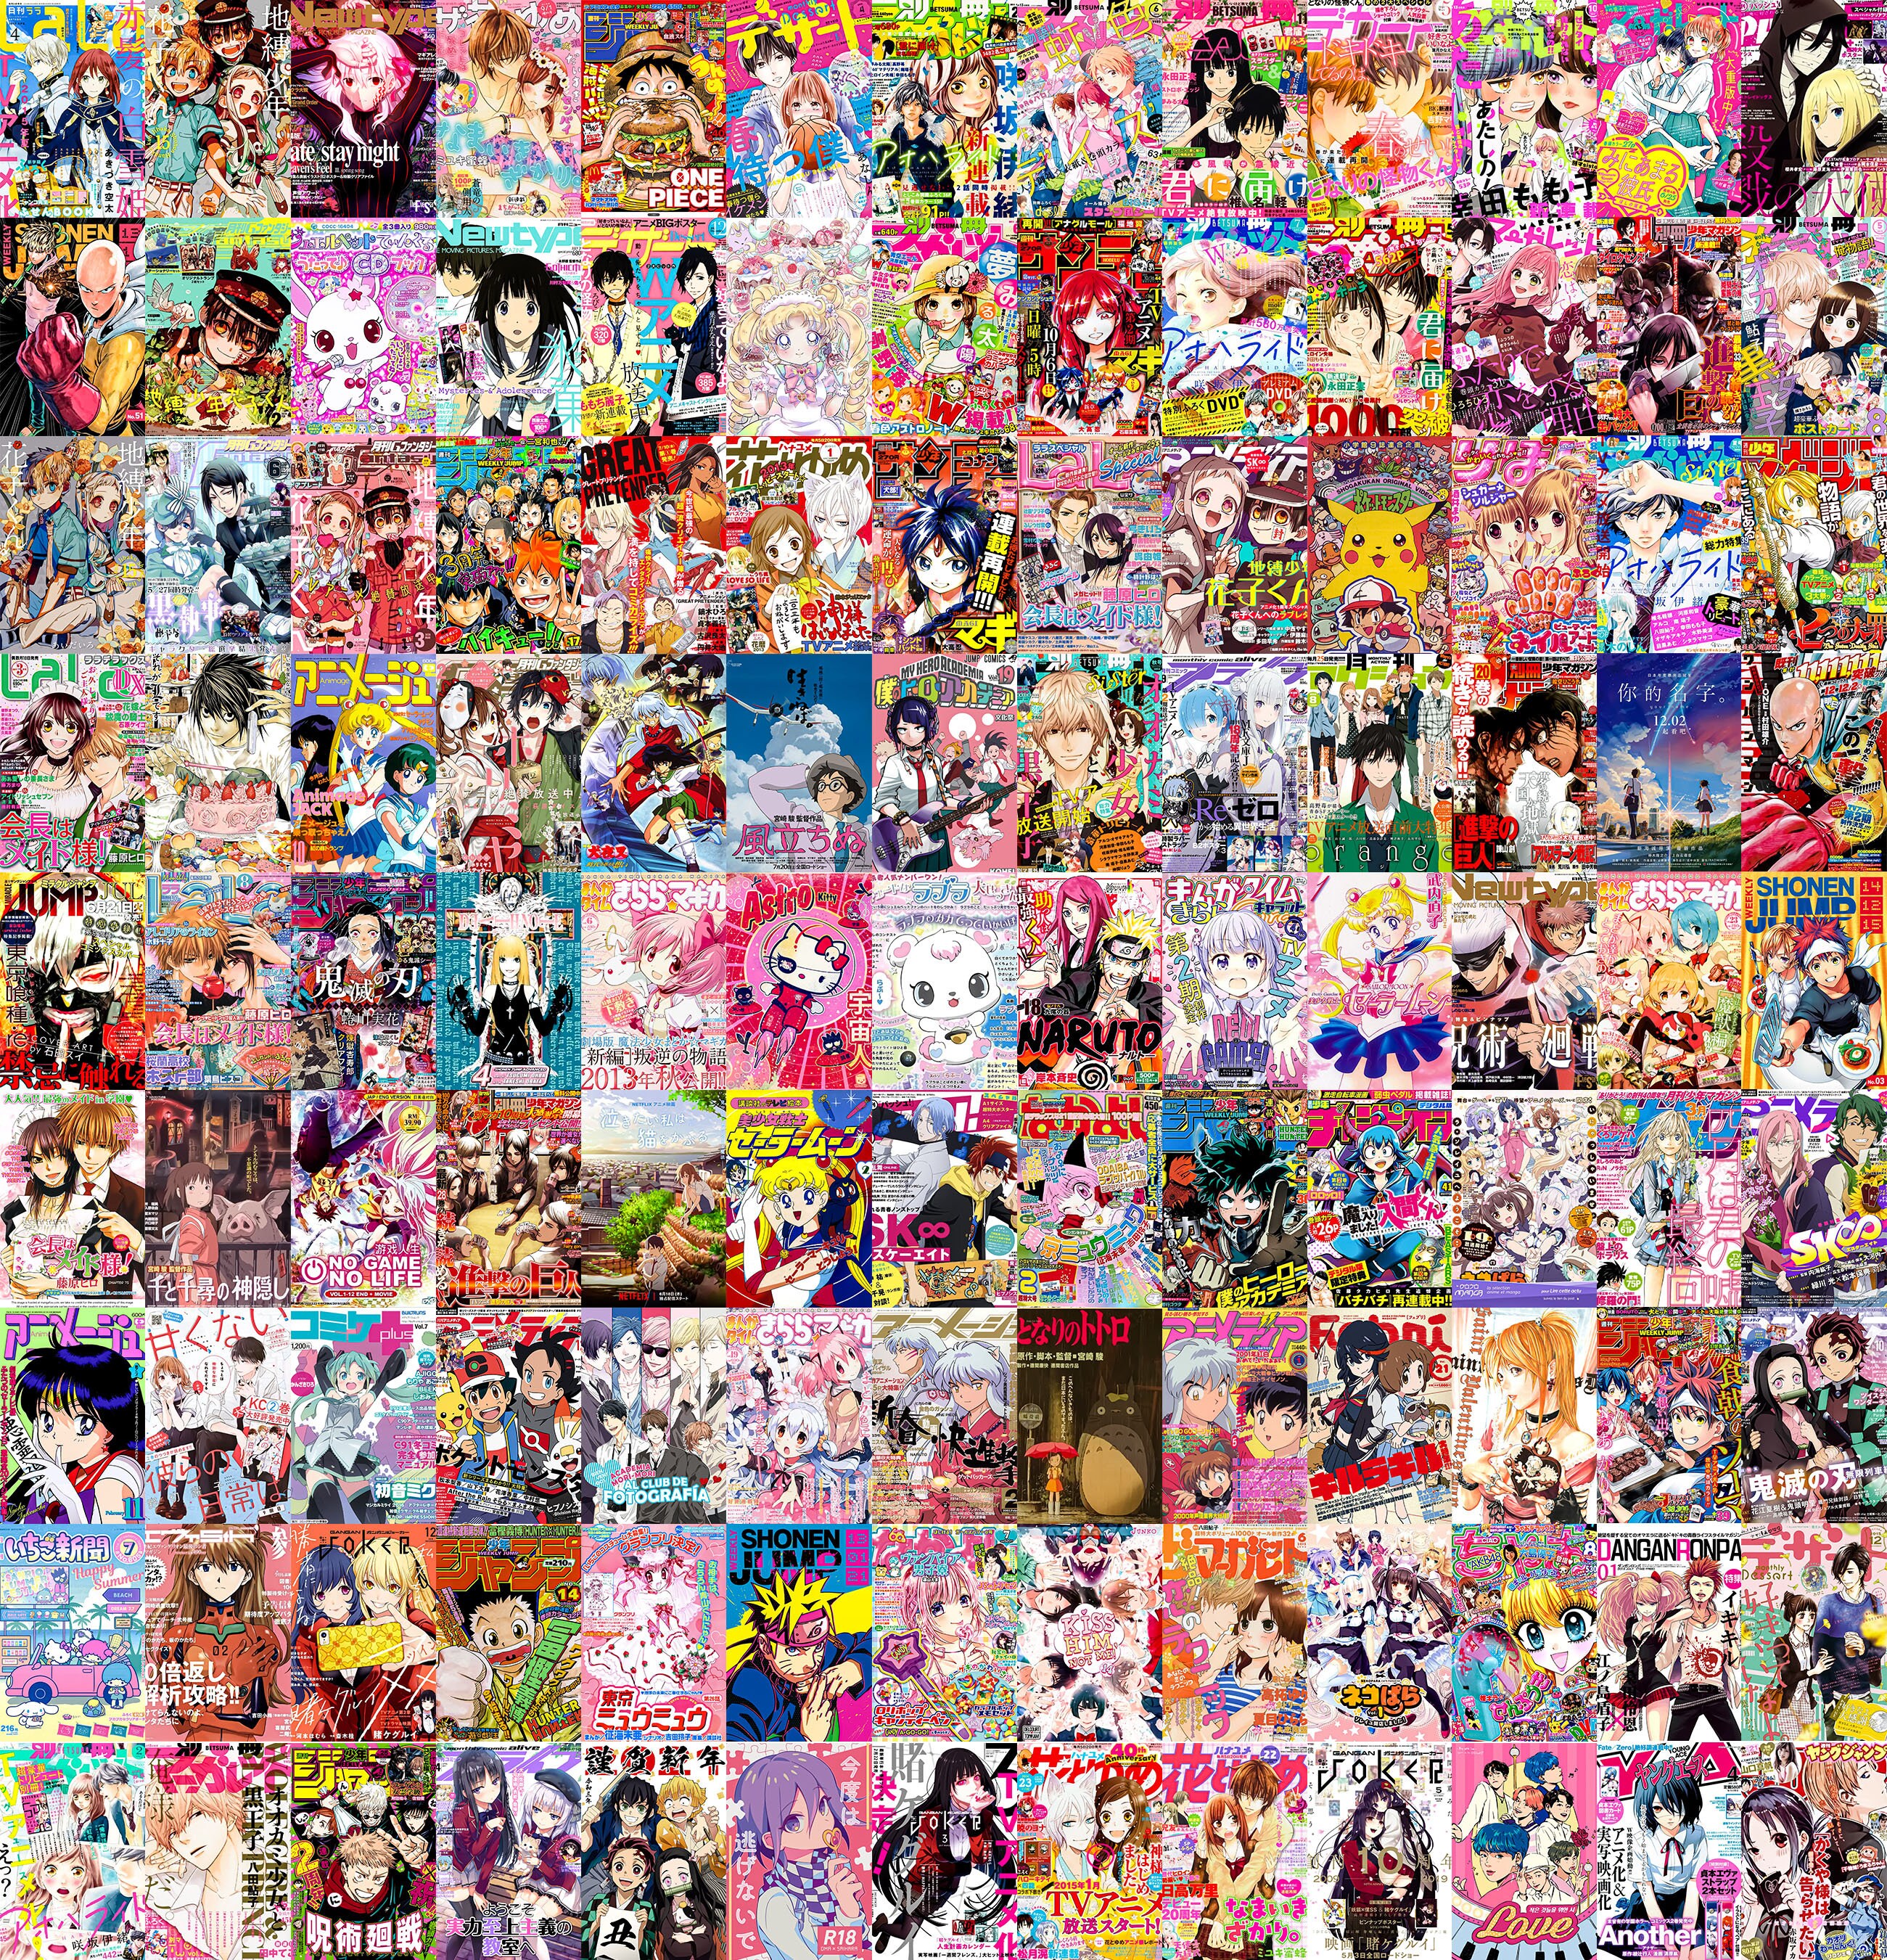 PRINTED 144 PCS Manga Panel Wall Collage, Anime Wall Collage Kit